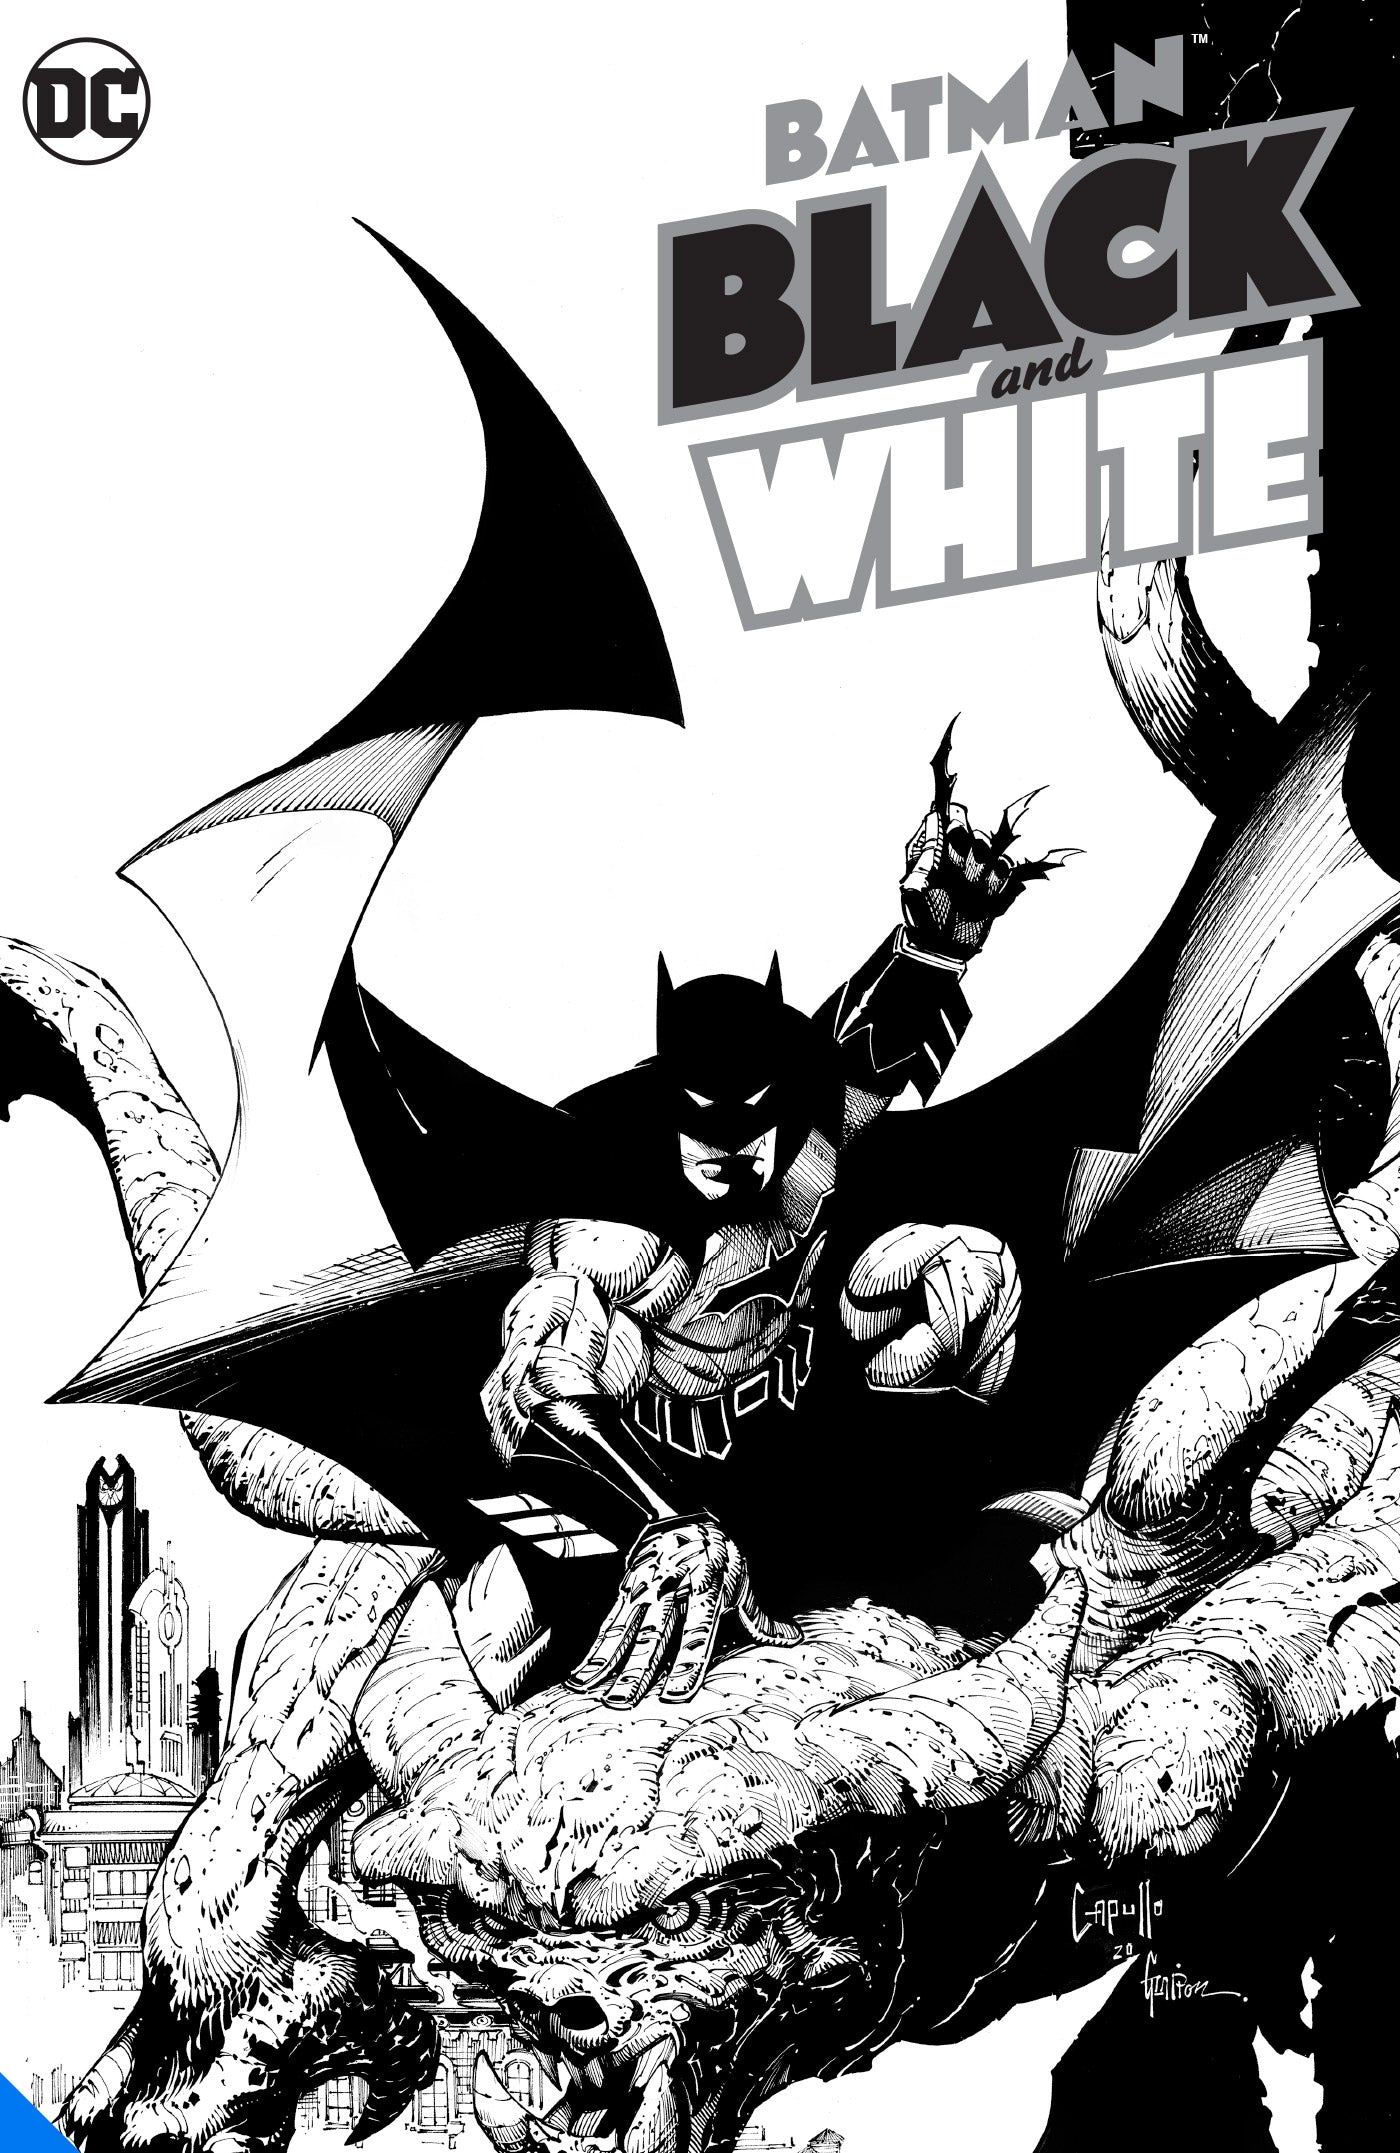 BATMAN BLACK & WHITE HARDCOVER